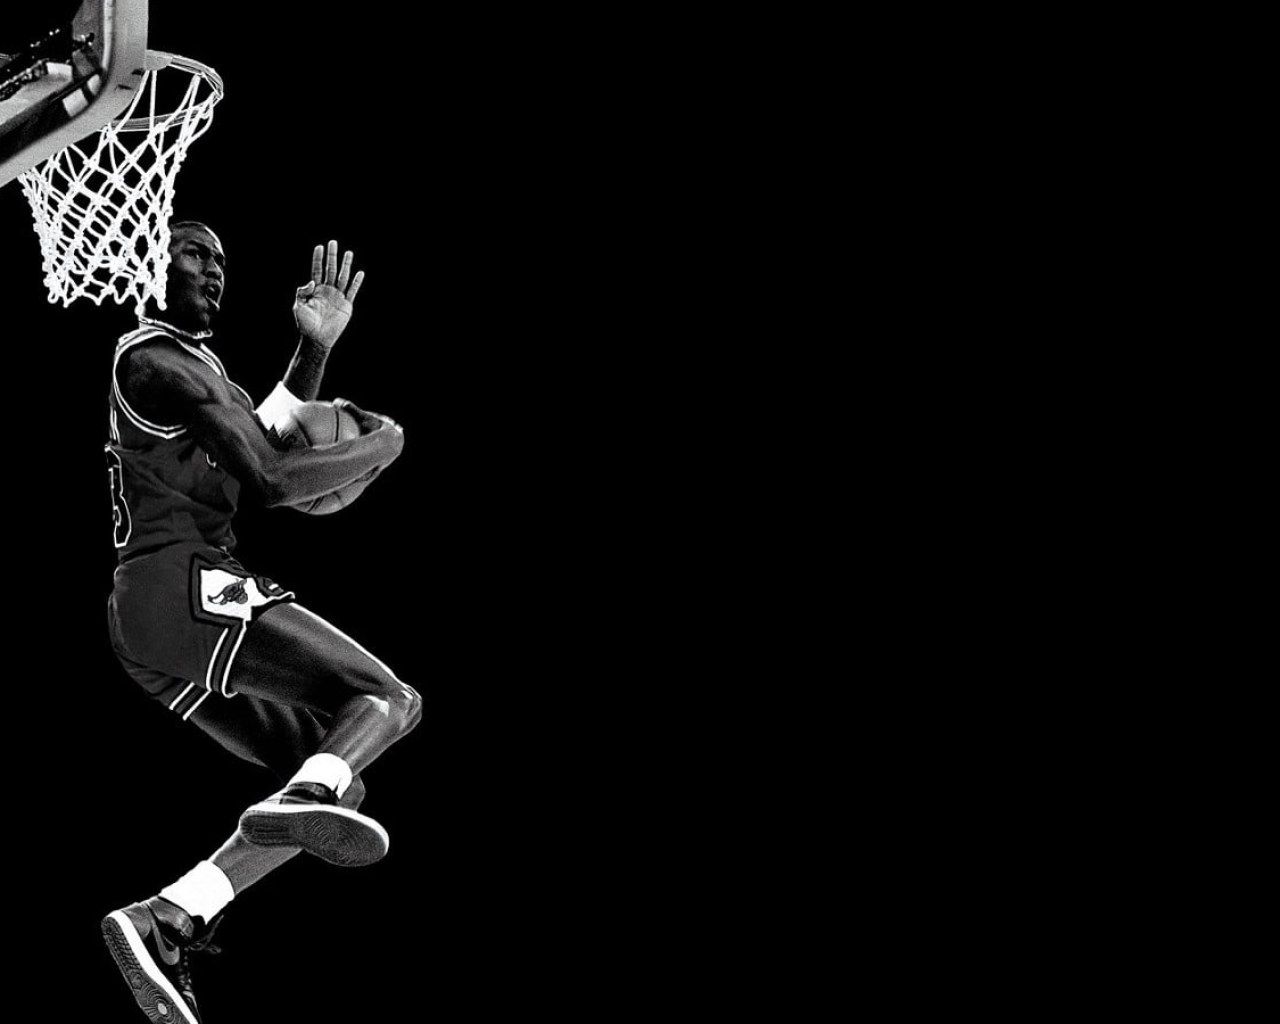 Michael Jordan Wallpaper, NBA, basketball, Slam Dunk, Chicago Bulls, Nike • Wallpaper For You HD Wallpaper For Desktop & Mobile